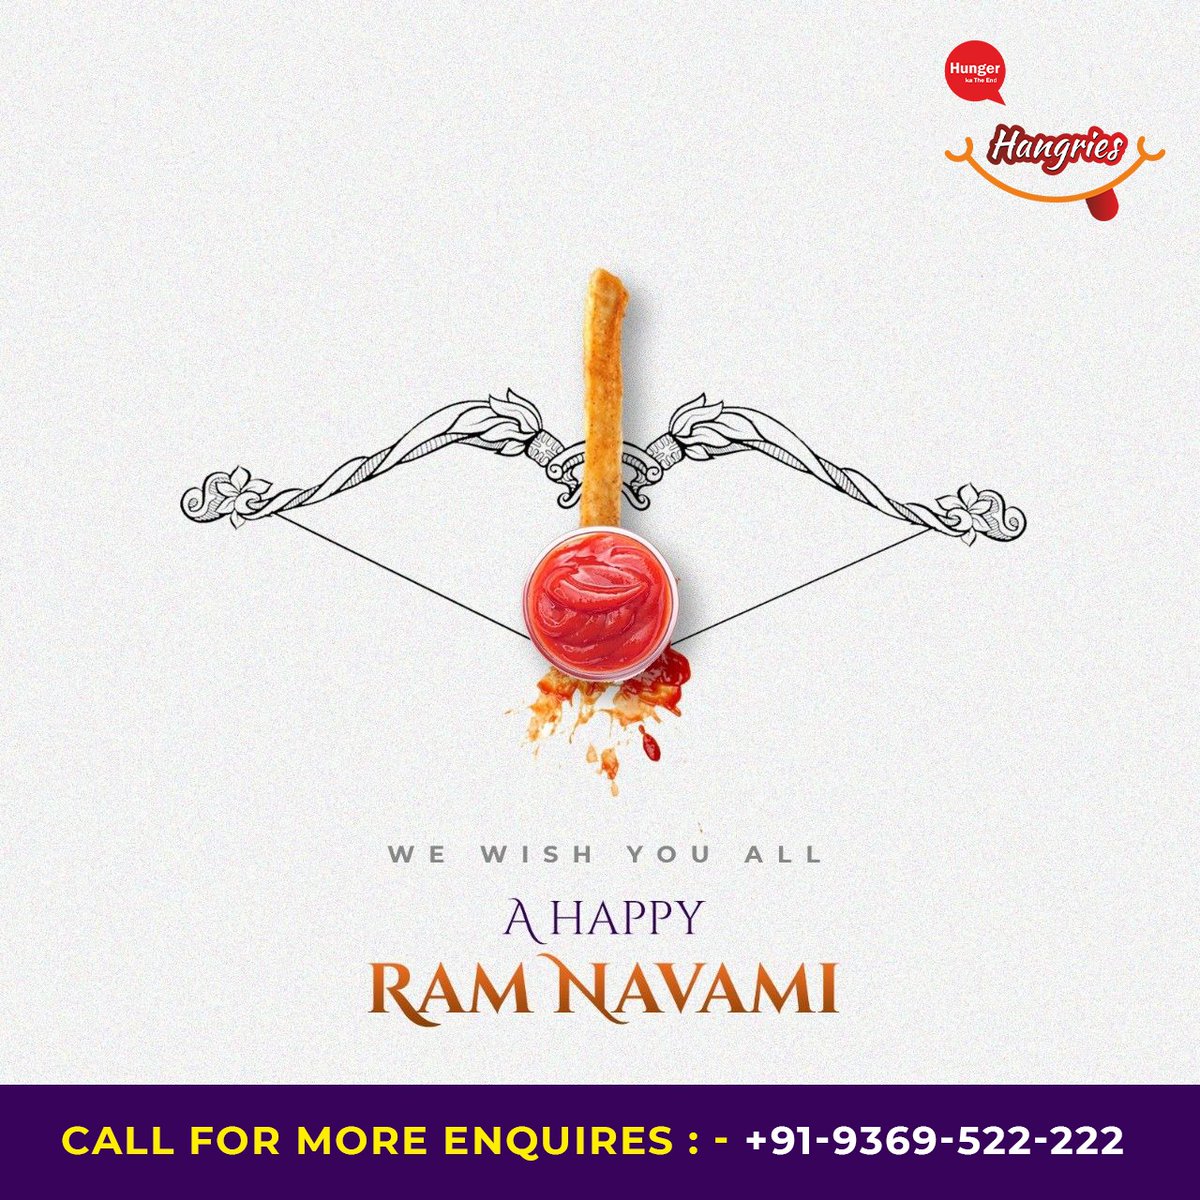 Wishing You a Blessed Ram Navami from Hangries!

#hangries #ramnavami #ramnavami2024 #lordram #hindufestival #festivevibes #divineblessings #hinduculture #rambhakt #ramayana #spirituality #hinduism #celebrationtime #festivedays #wcsjoyfulmoments #divinegrace #indianfestival